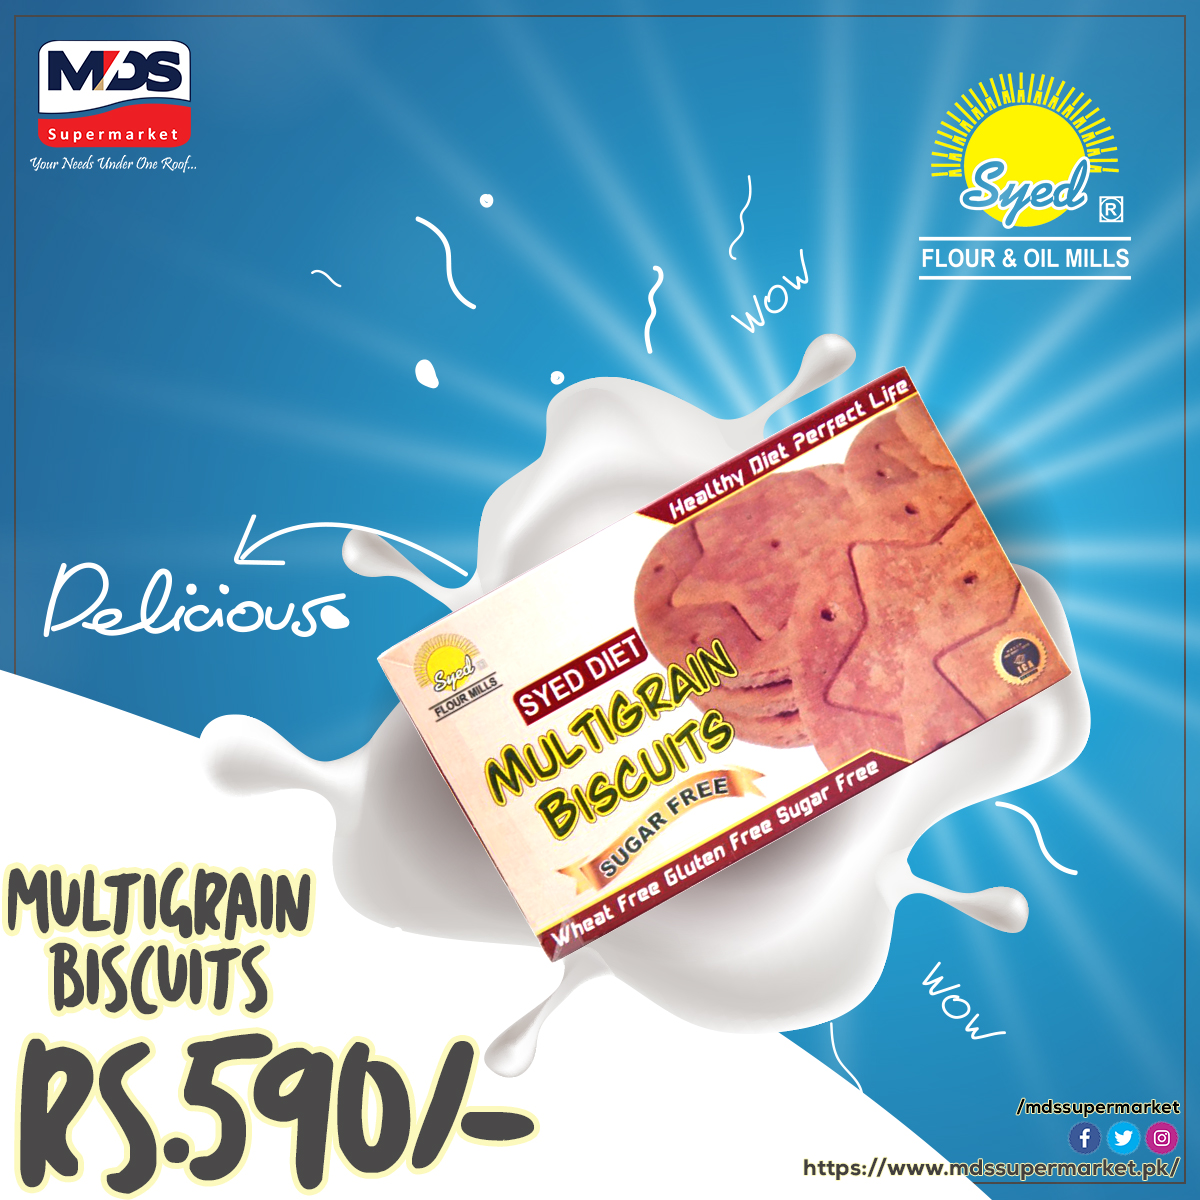 Available at MDS Supermarket

Branch 1: Toghi Road Quetta.
Tel: 081-2823444

Branch 2: Quarry Road, Quetta.
Tel: 081-2823420

Email: info@mdssupermarket
Website: mdssupermarket.pk

#SyedDietMultigrainBiscuits #MDSsupermarket #HealthySnacks #NutritiousChoice #MultigrainGood